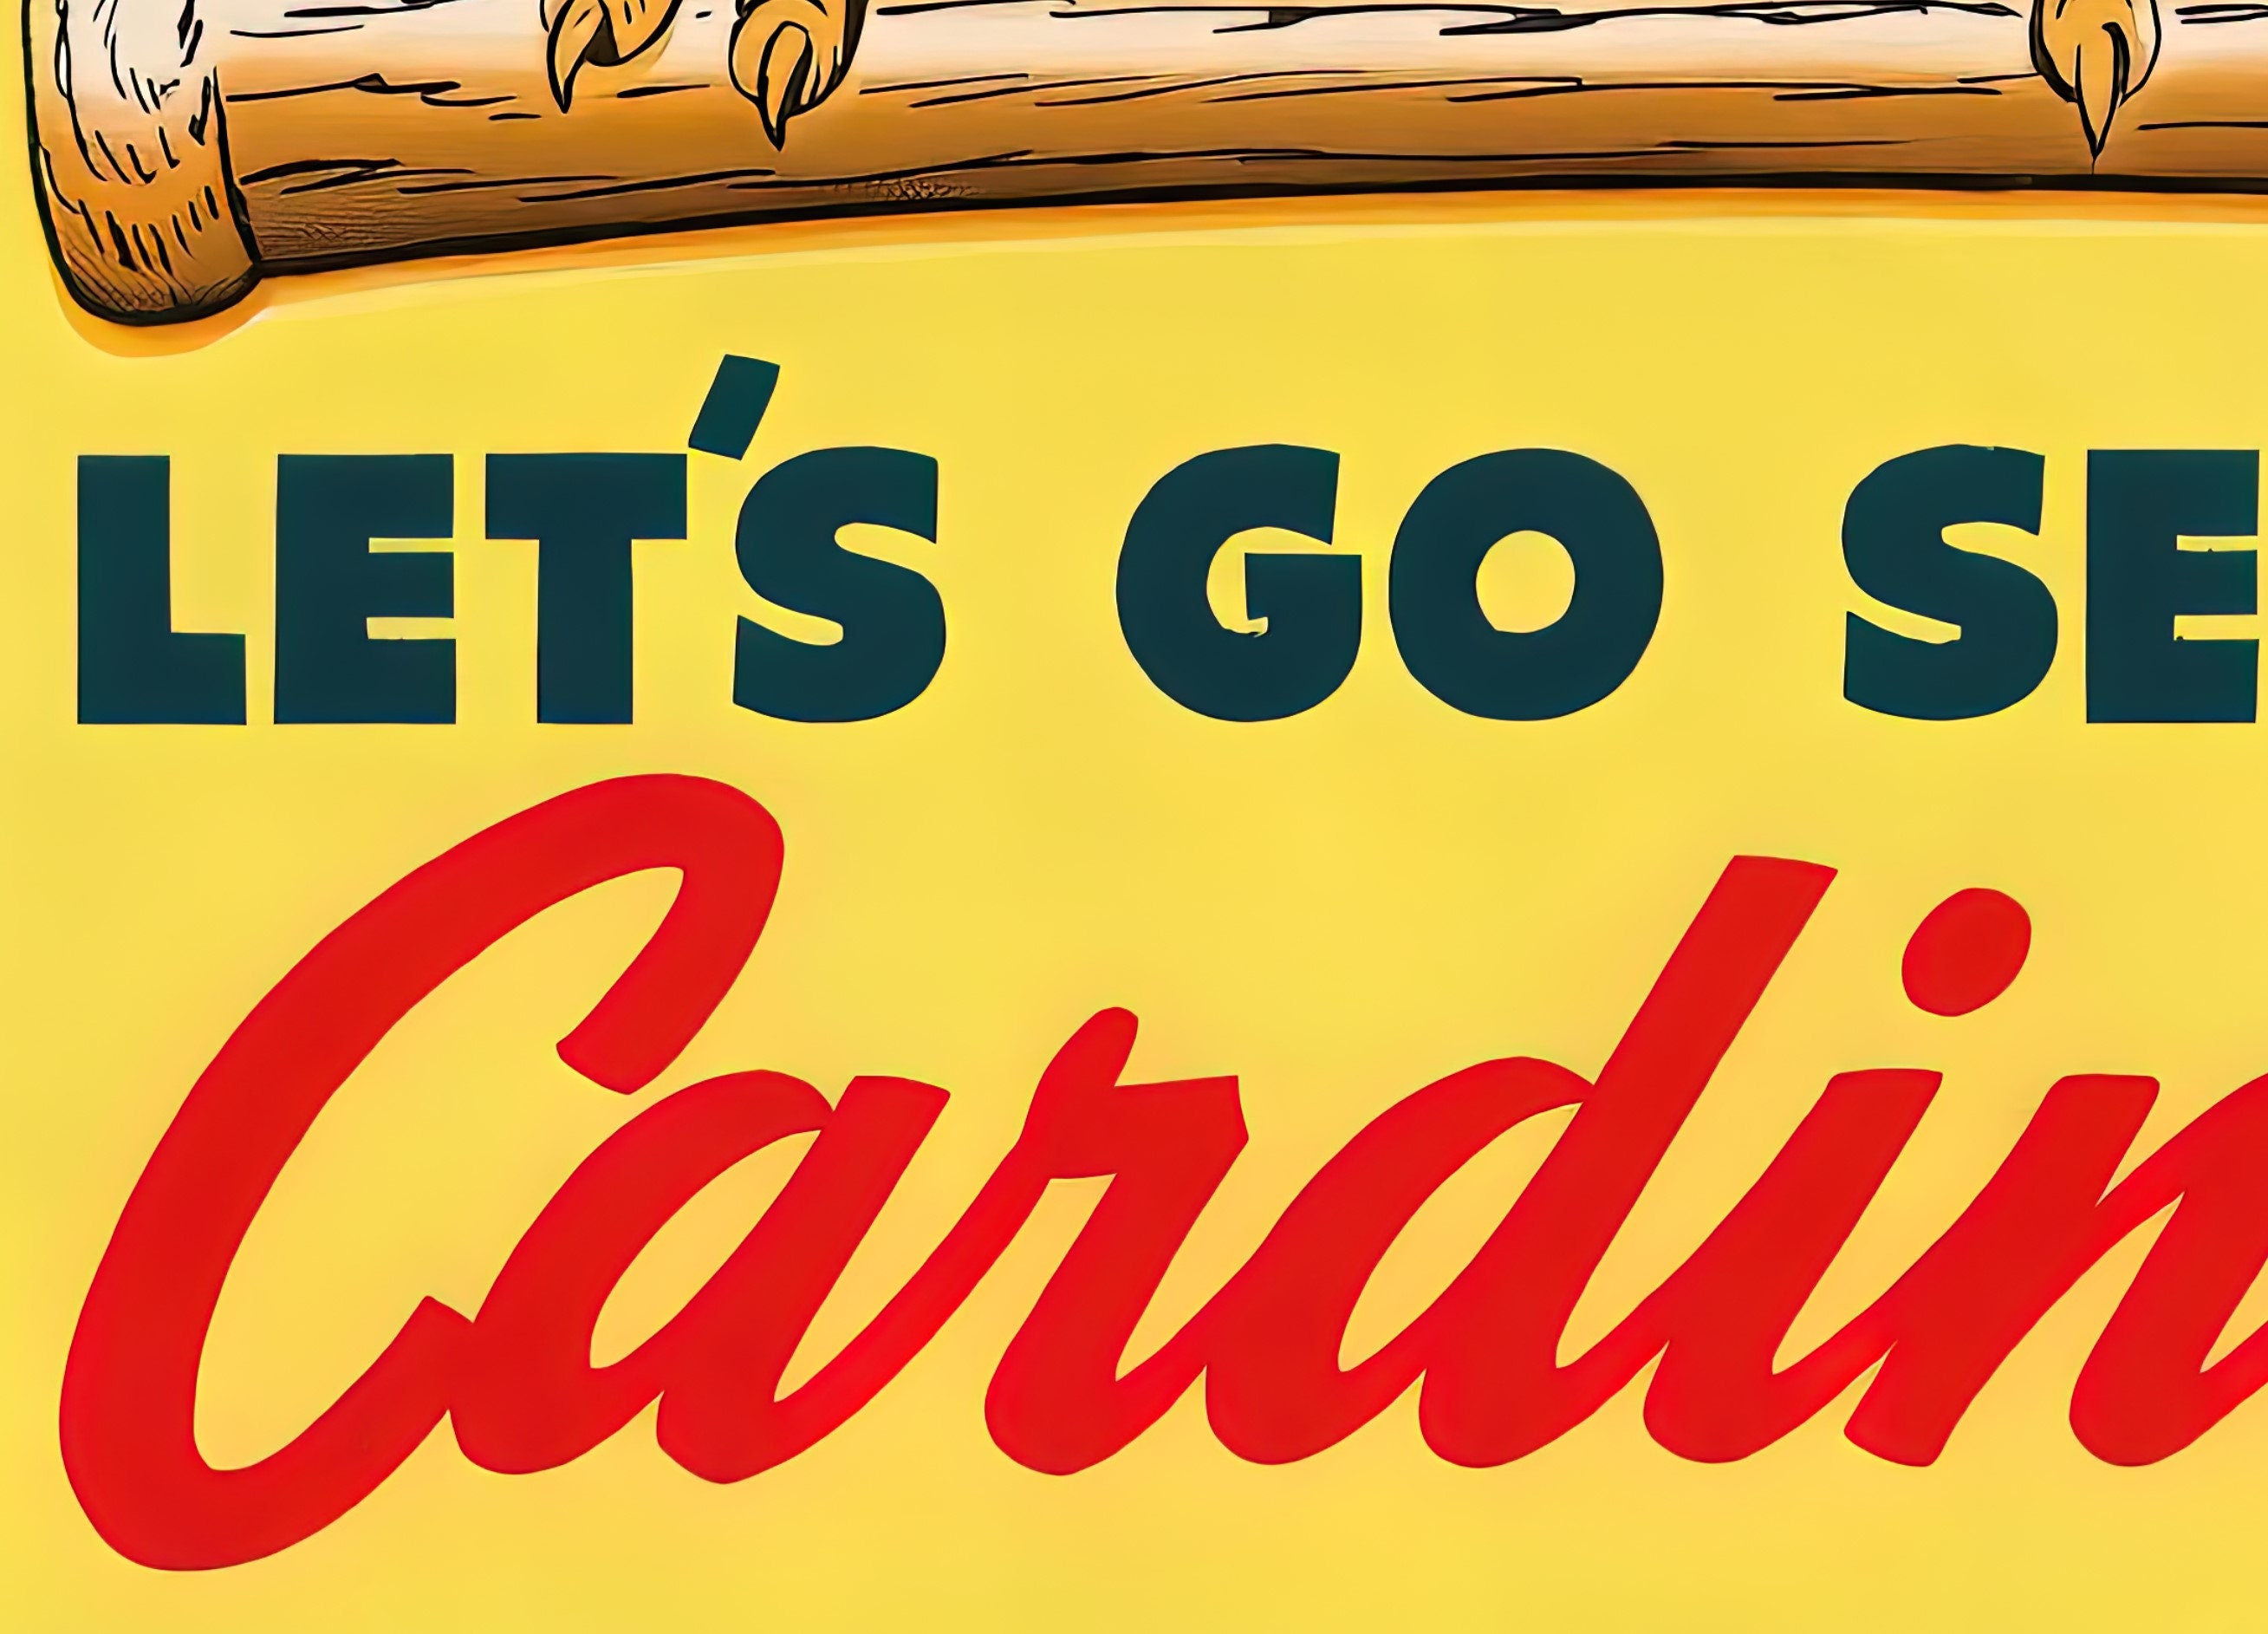 1950's ST. LOUIS CARDINALS Print Vintage Baseball -   St louis  cardinals baseball, Baseball posters, St louis